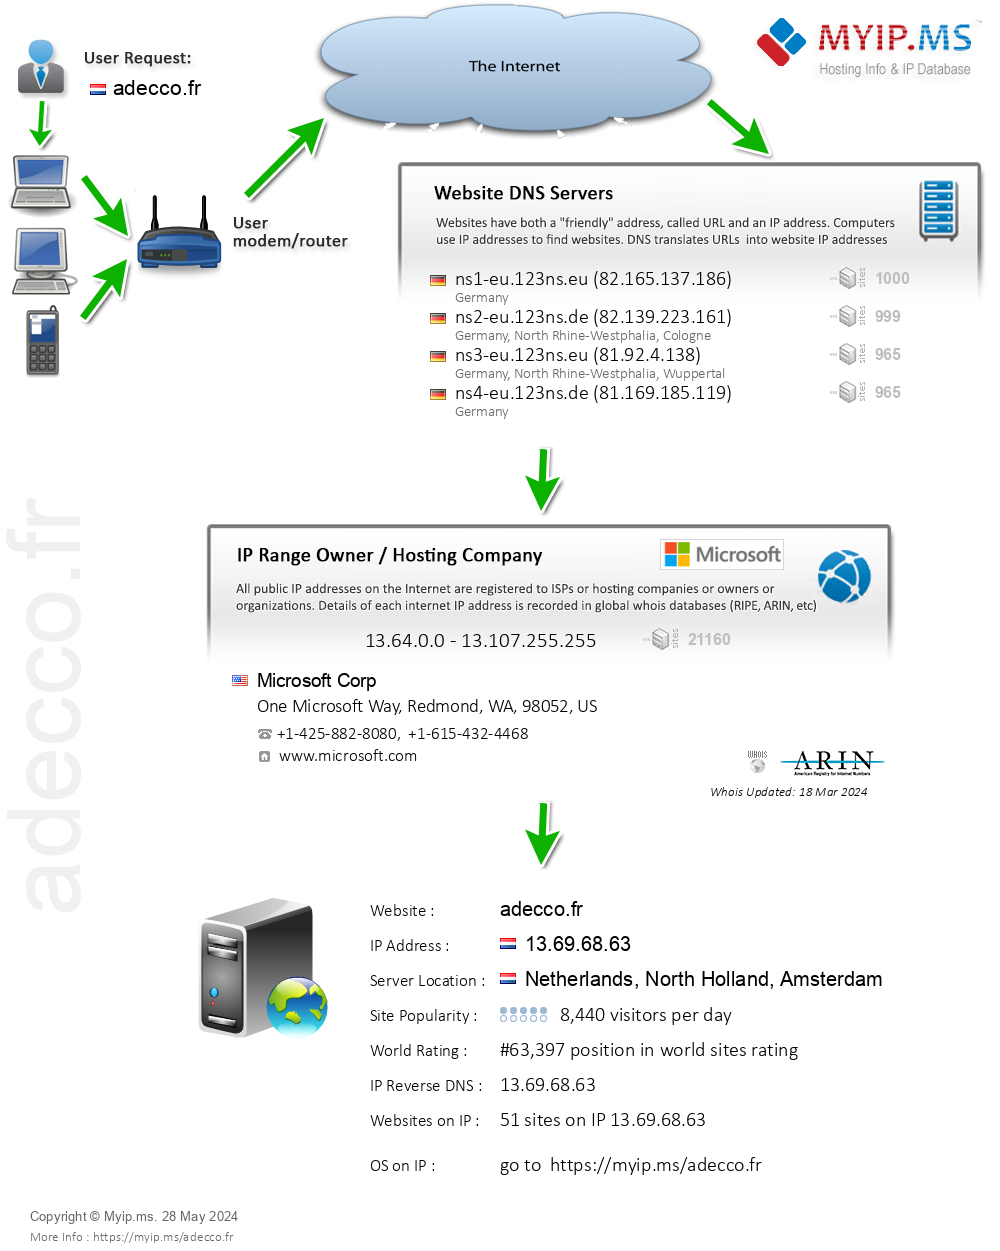 Adecco.fr - Website Hosting Visual IP Diagram